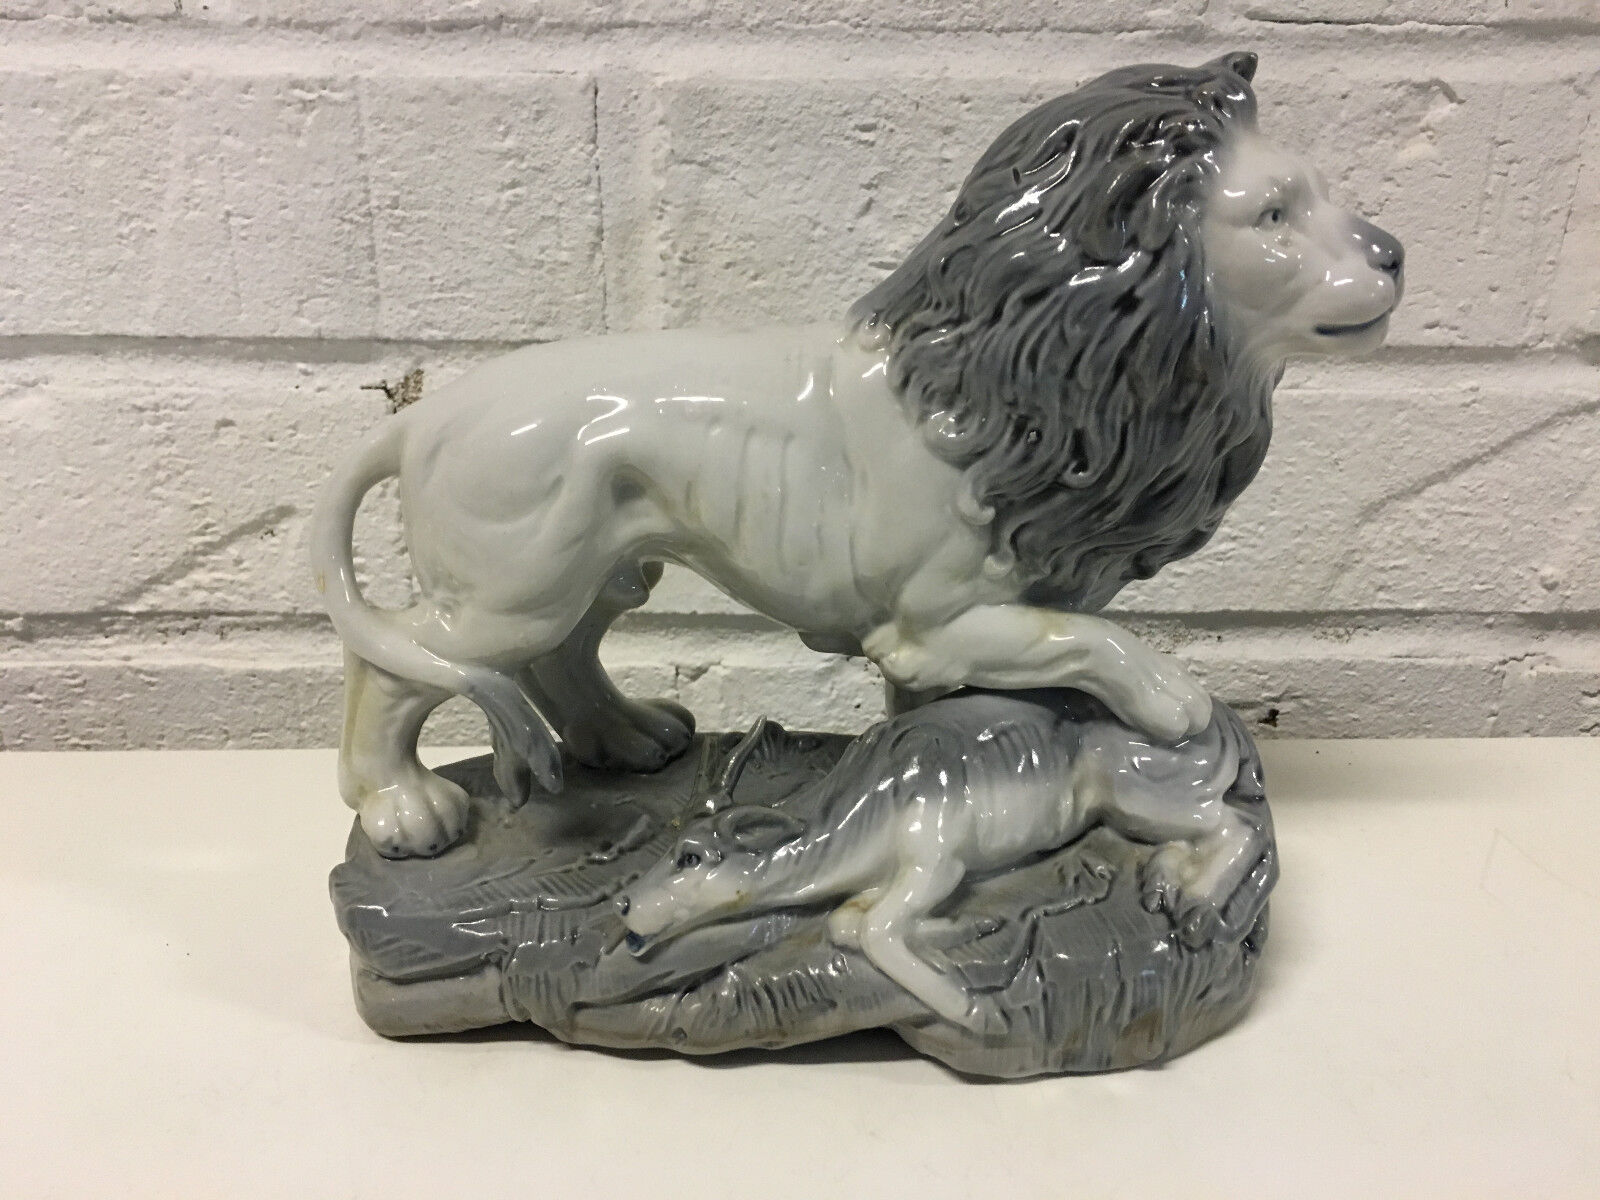 Vintage Likely European Ceramic Figurine of Lion w/ Paw Over Antelope Prey